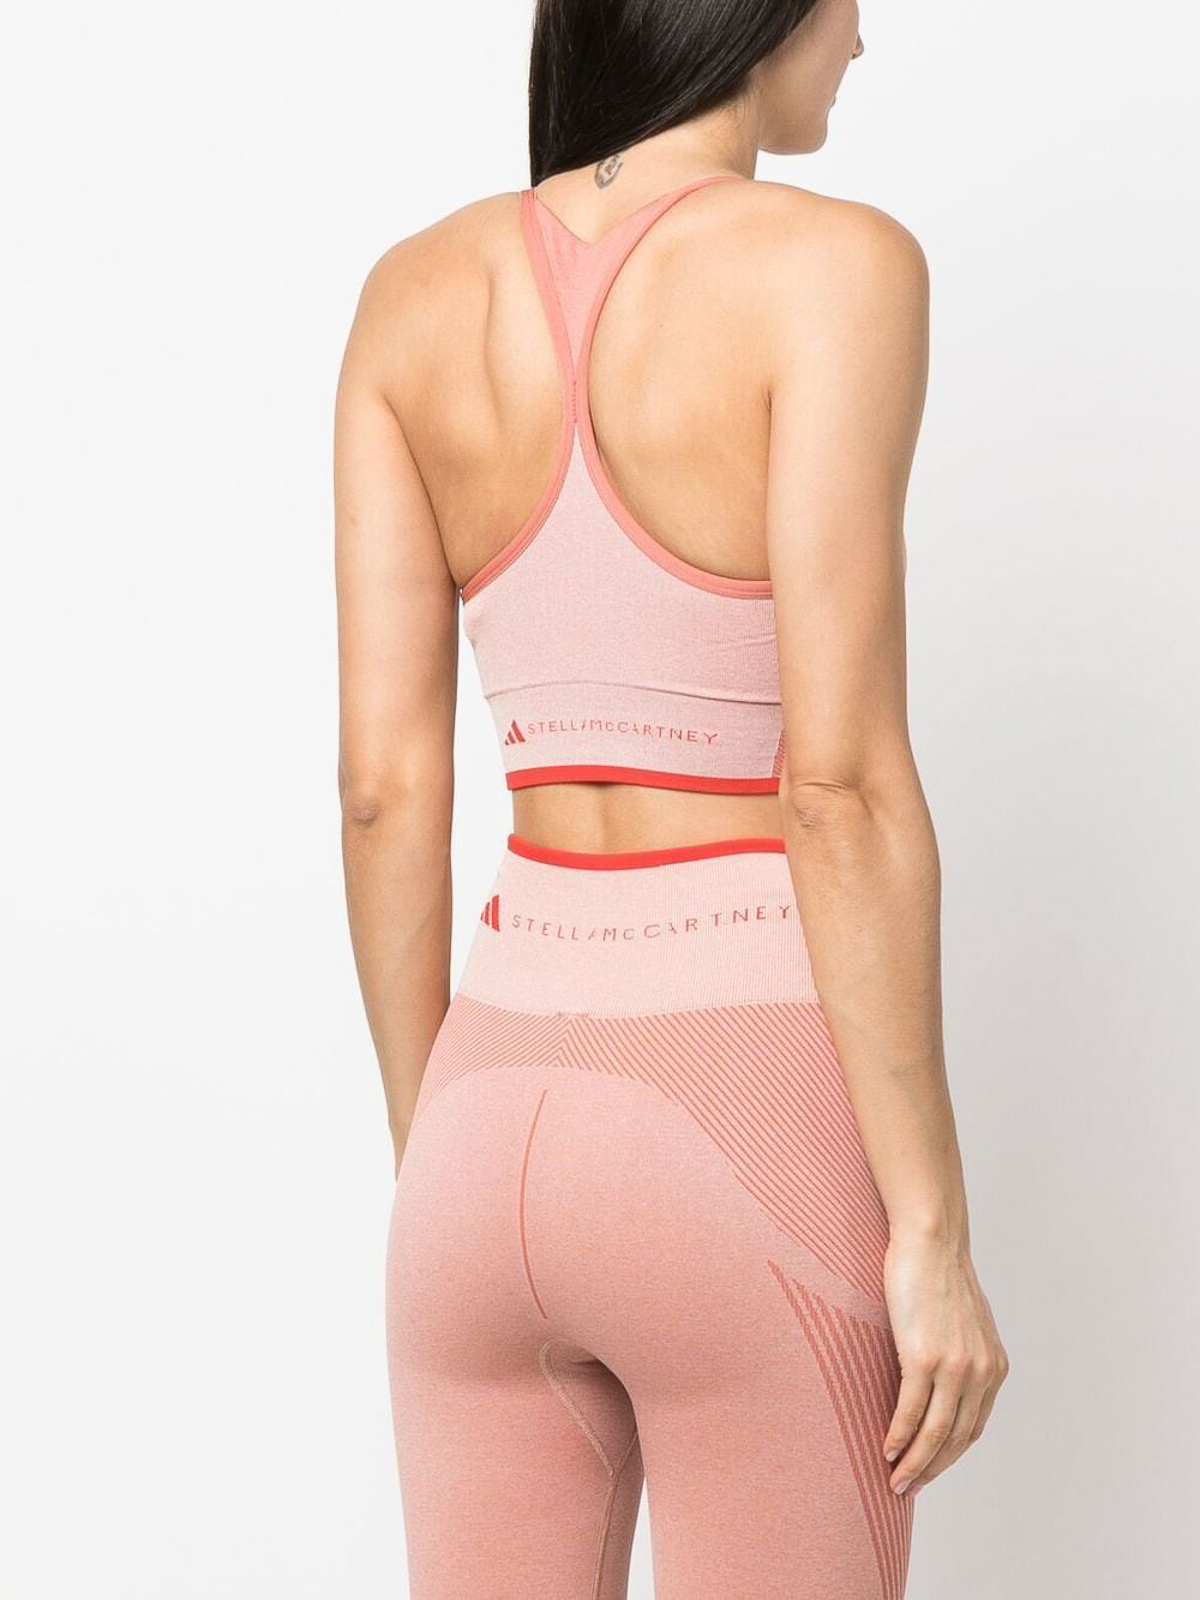 TrueStrength sports bra in pink - Adidas By Stella Mc Cartney